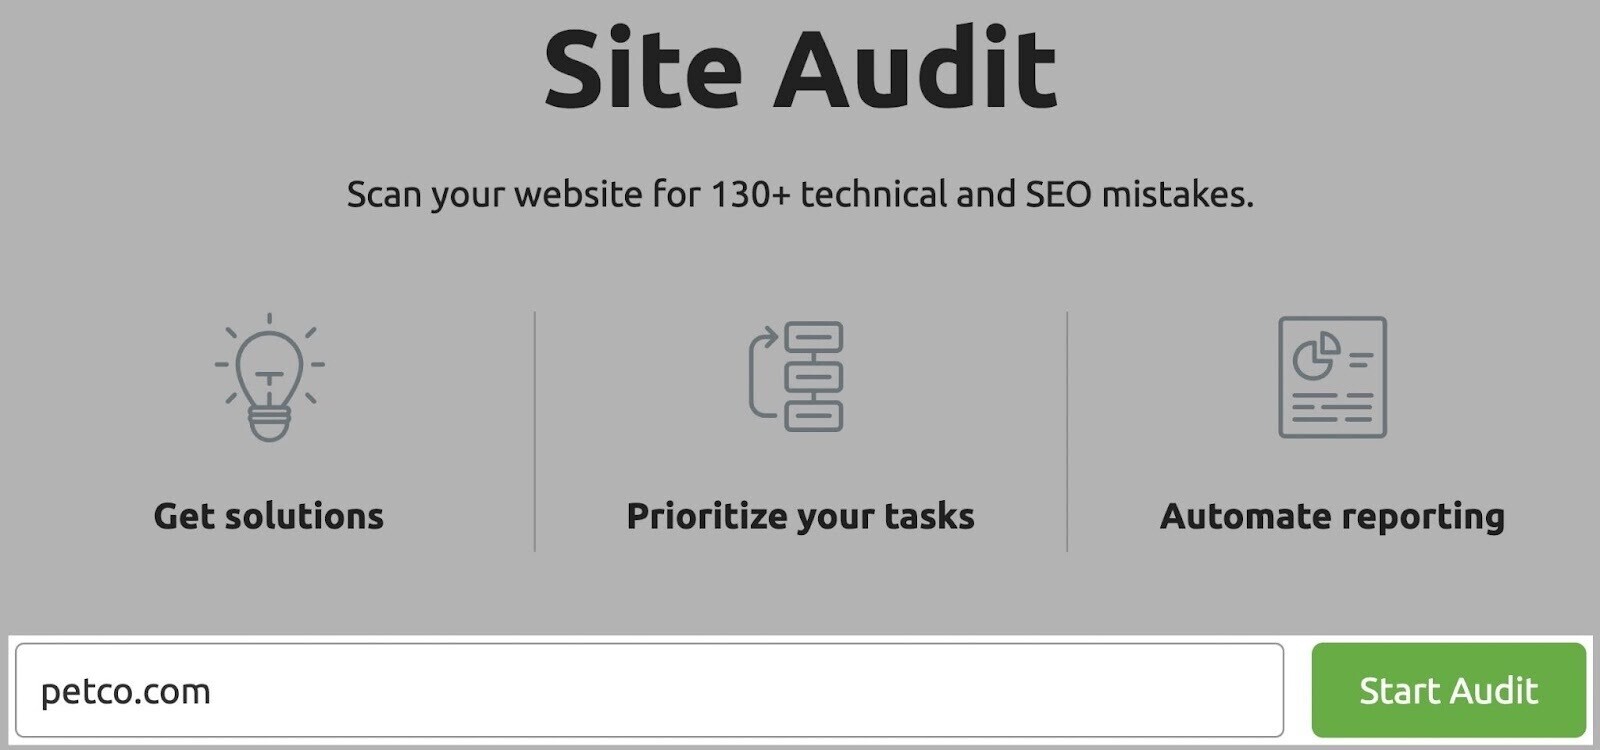 Site Audit main page